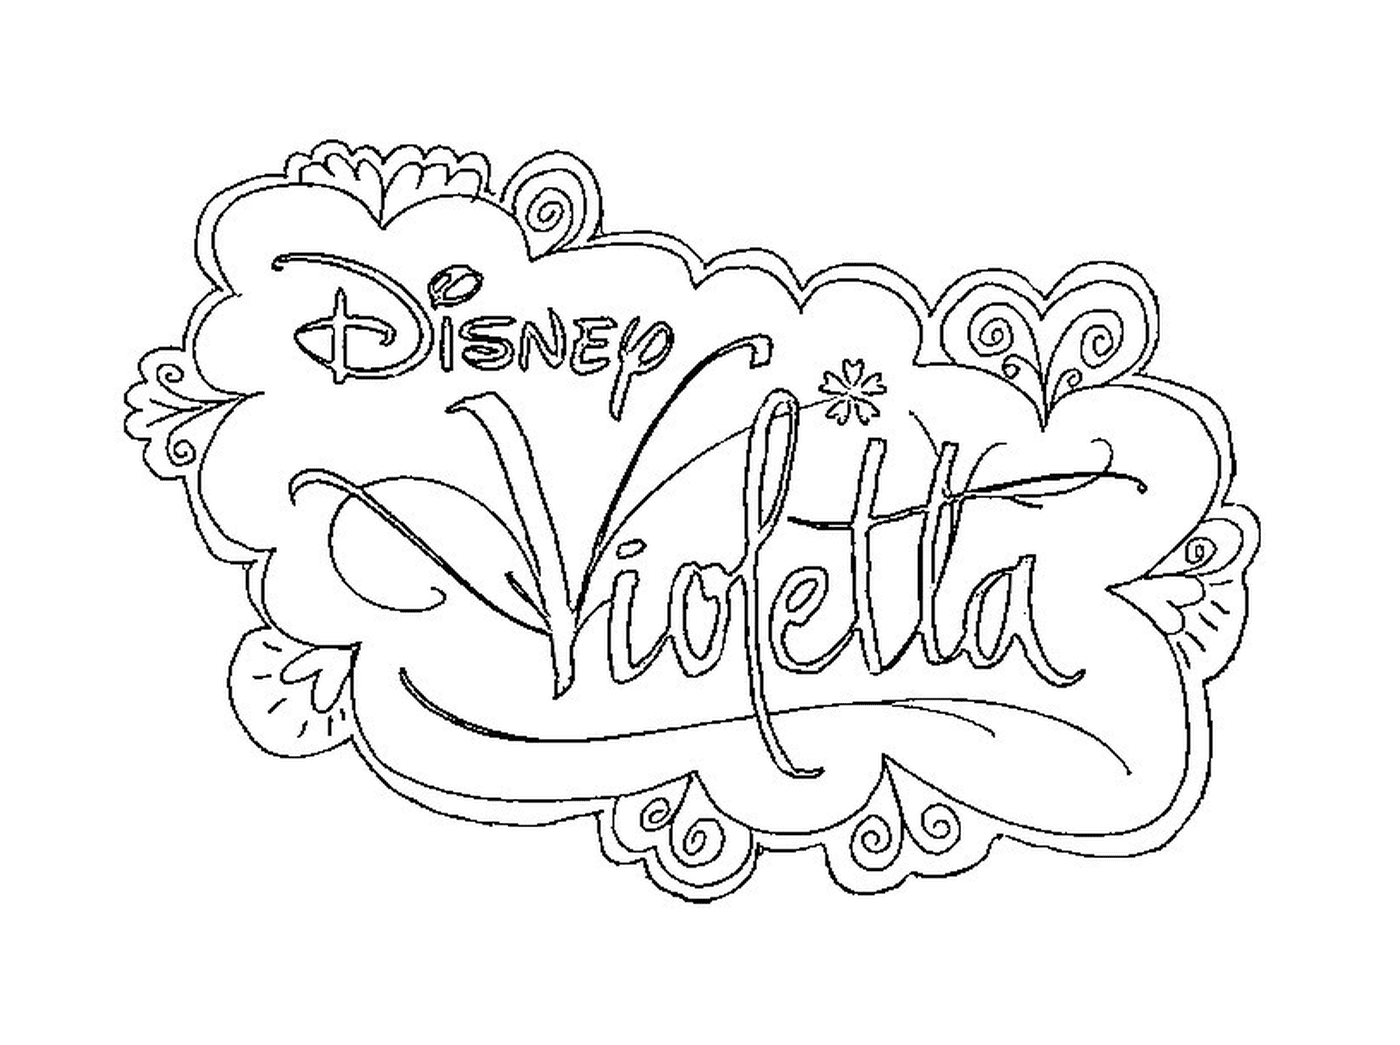   Logo Disney Violetta 